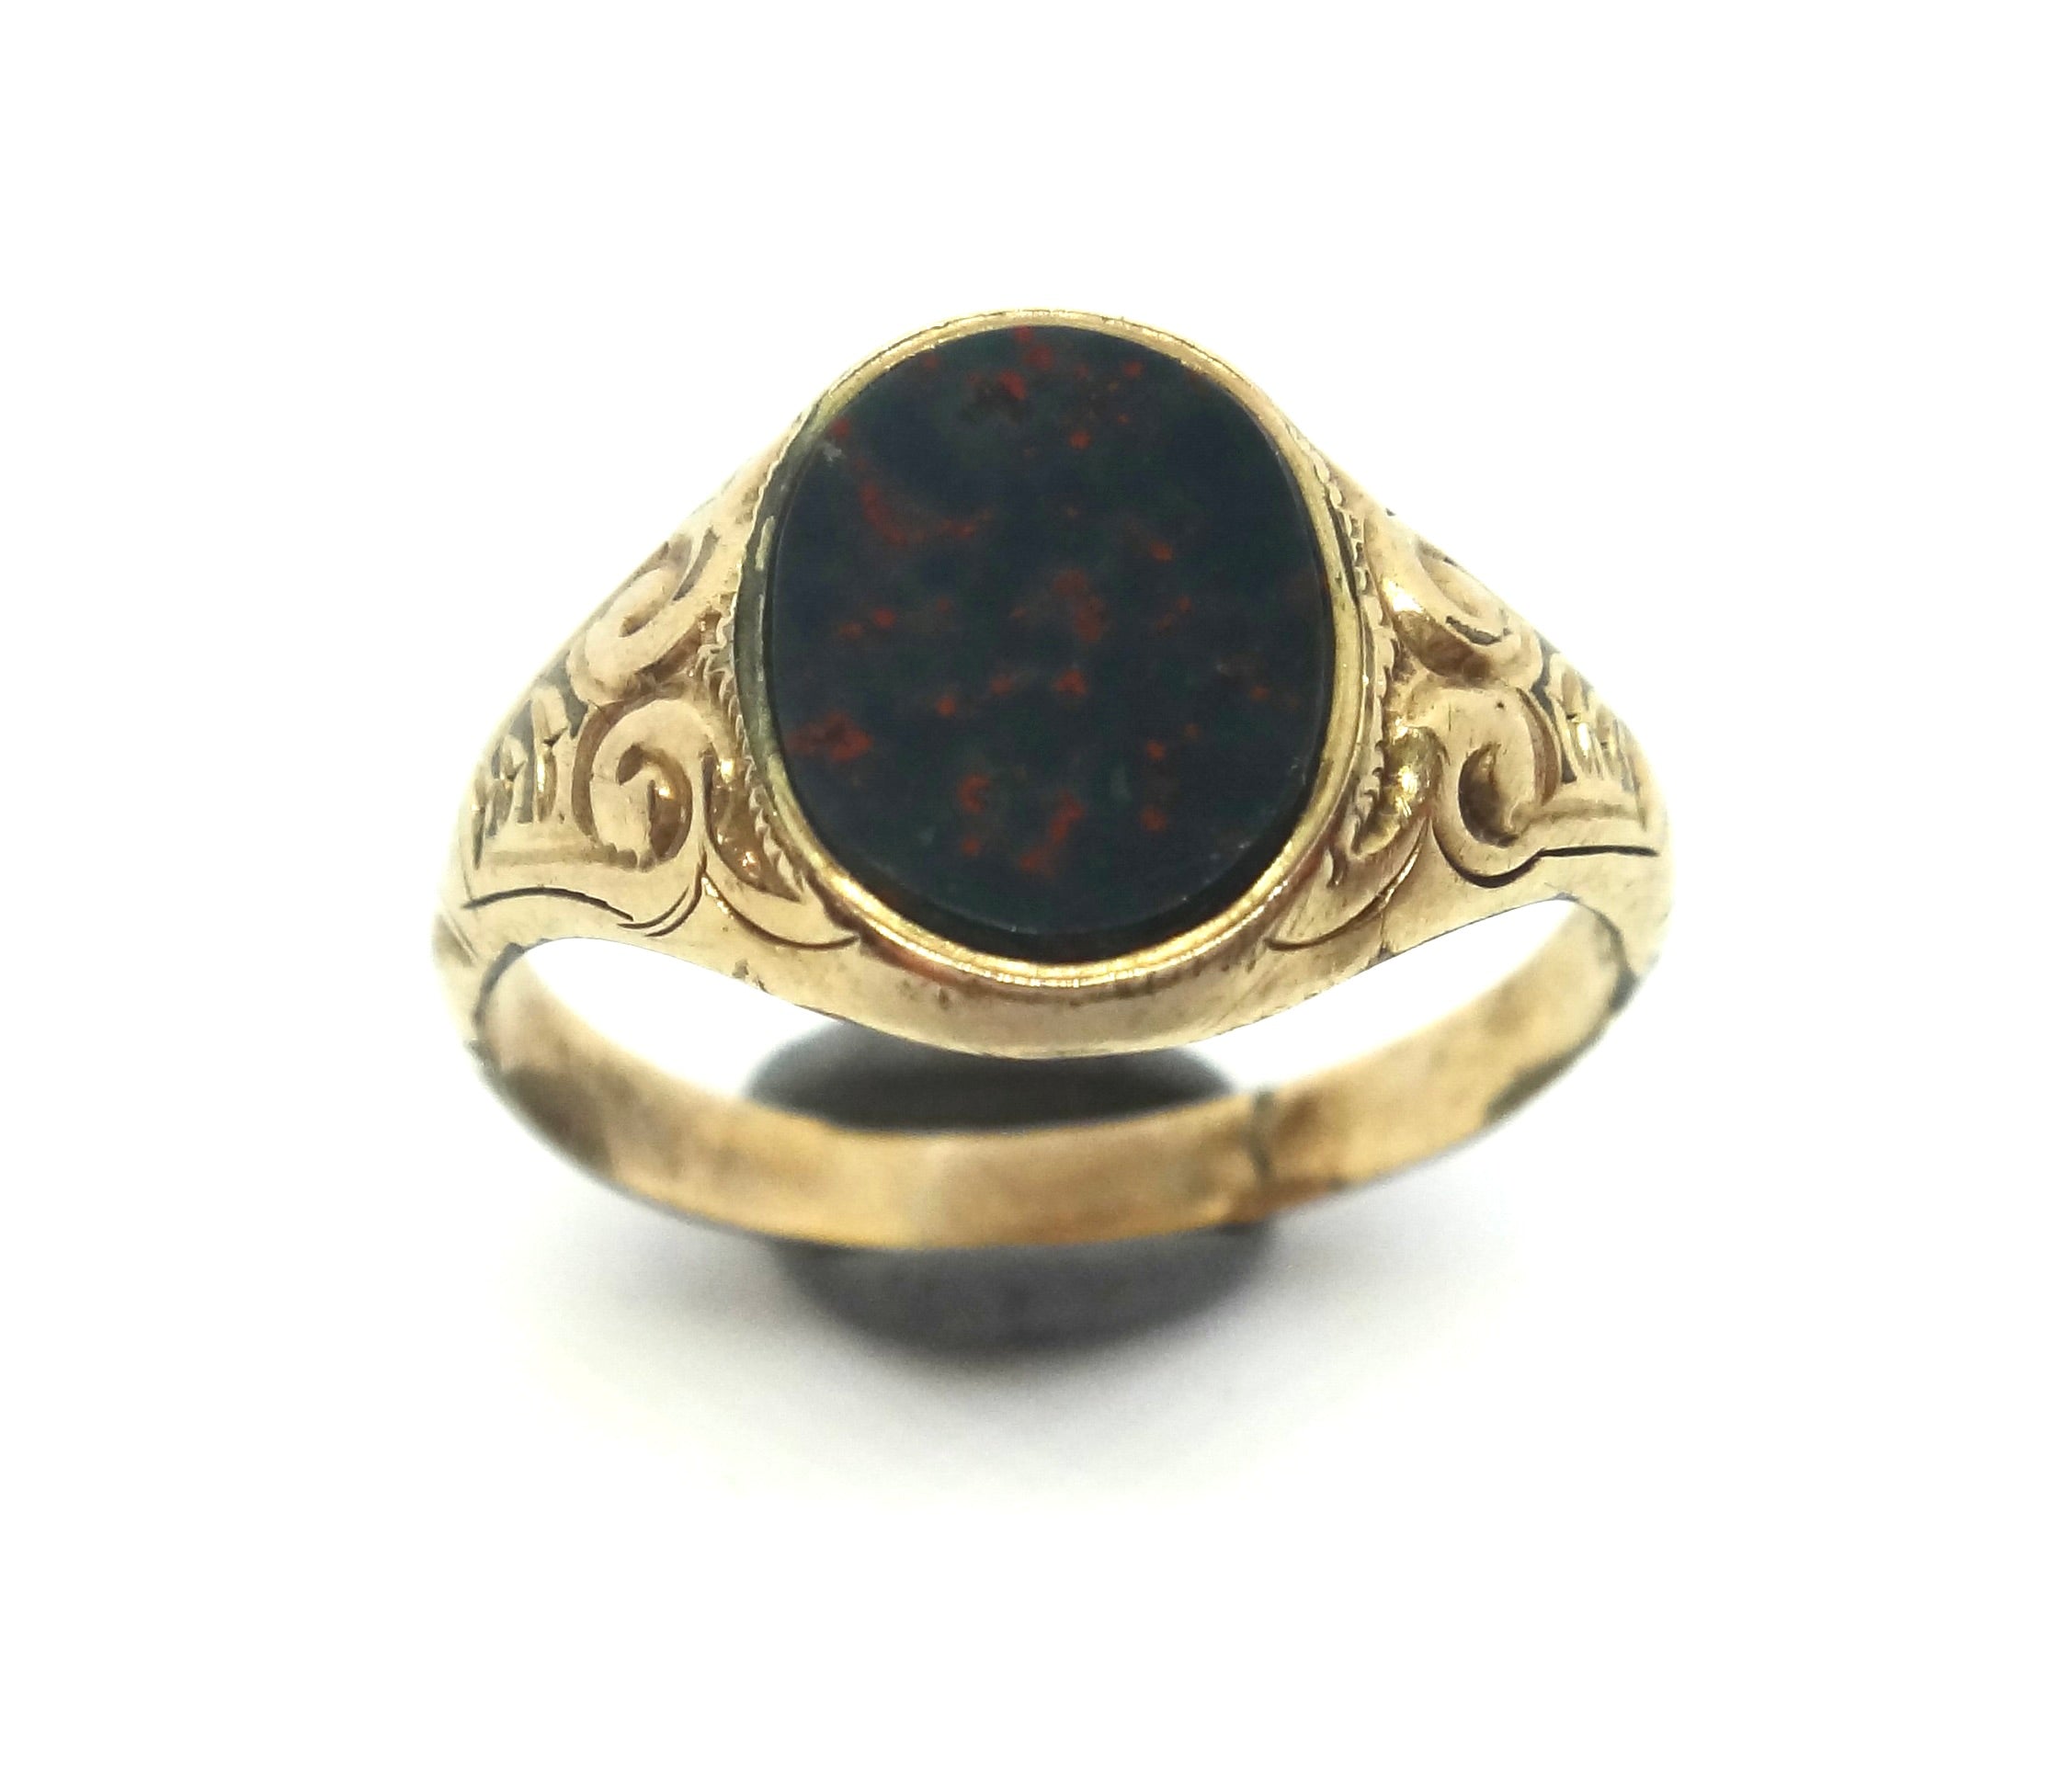 ANTIQUE 9ct Yellow GOLD & Bloodstone Signet Ring c.1920